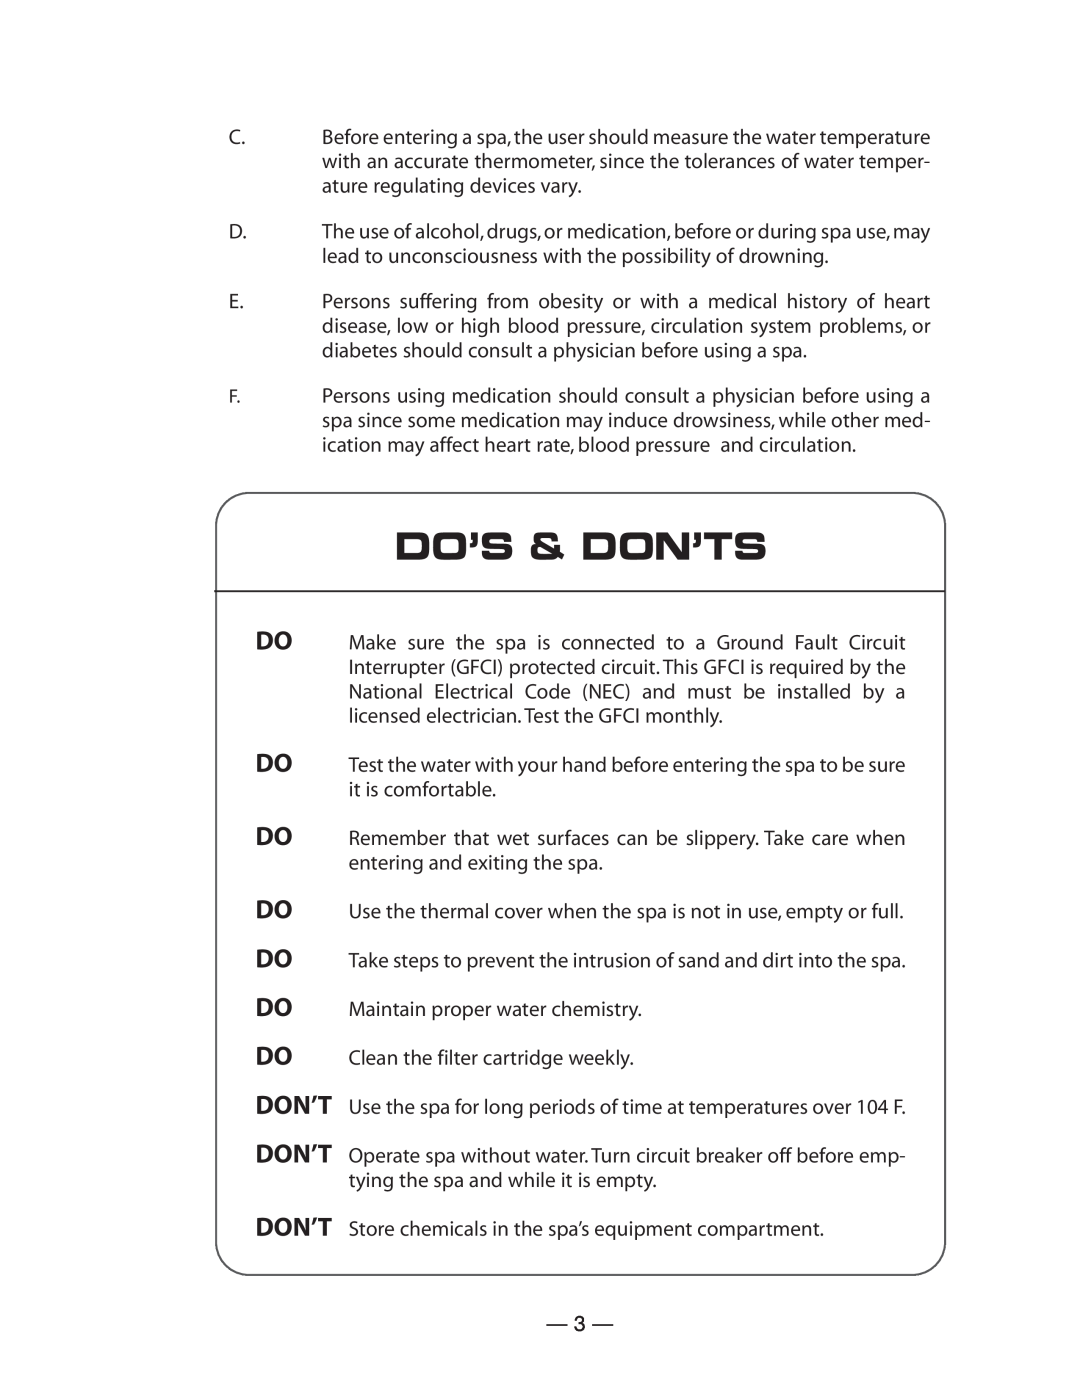 Vita Spa LD-15 Series manual Do’S & Don’Ts, Do Do Do Do Do, Do Don’T Don’T 